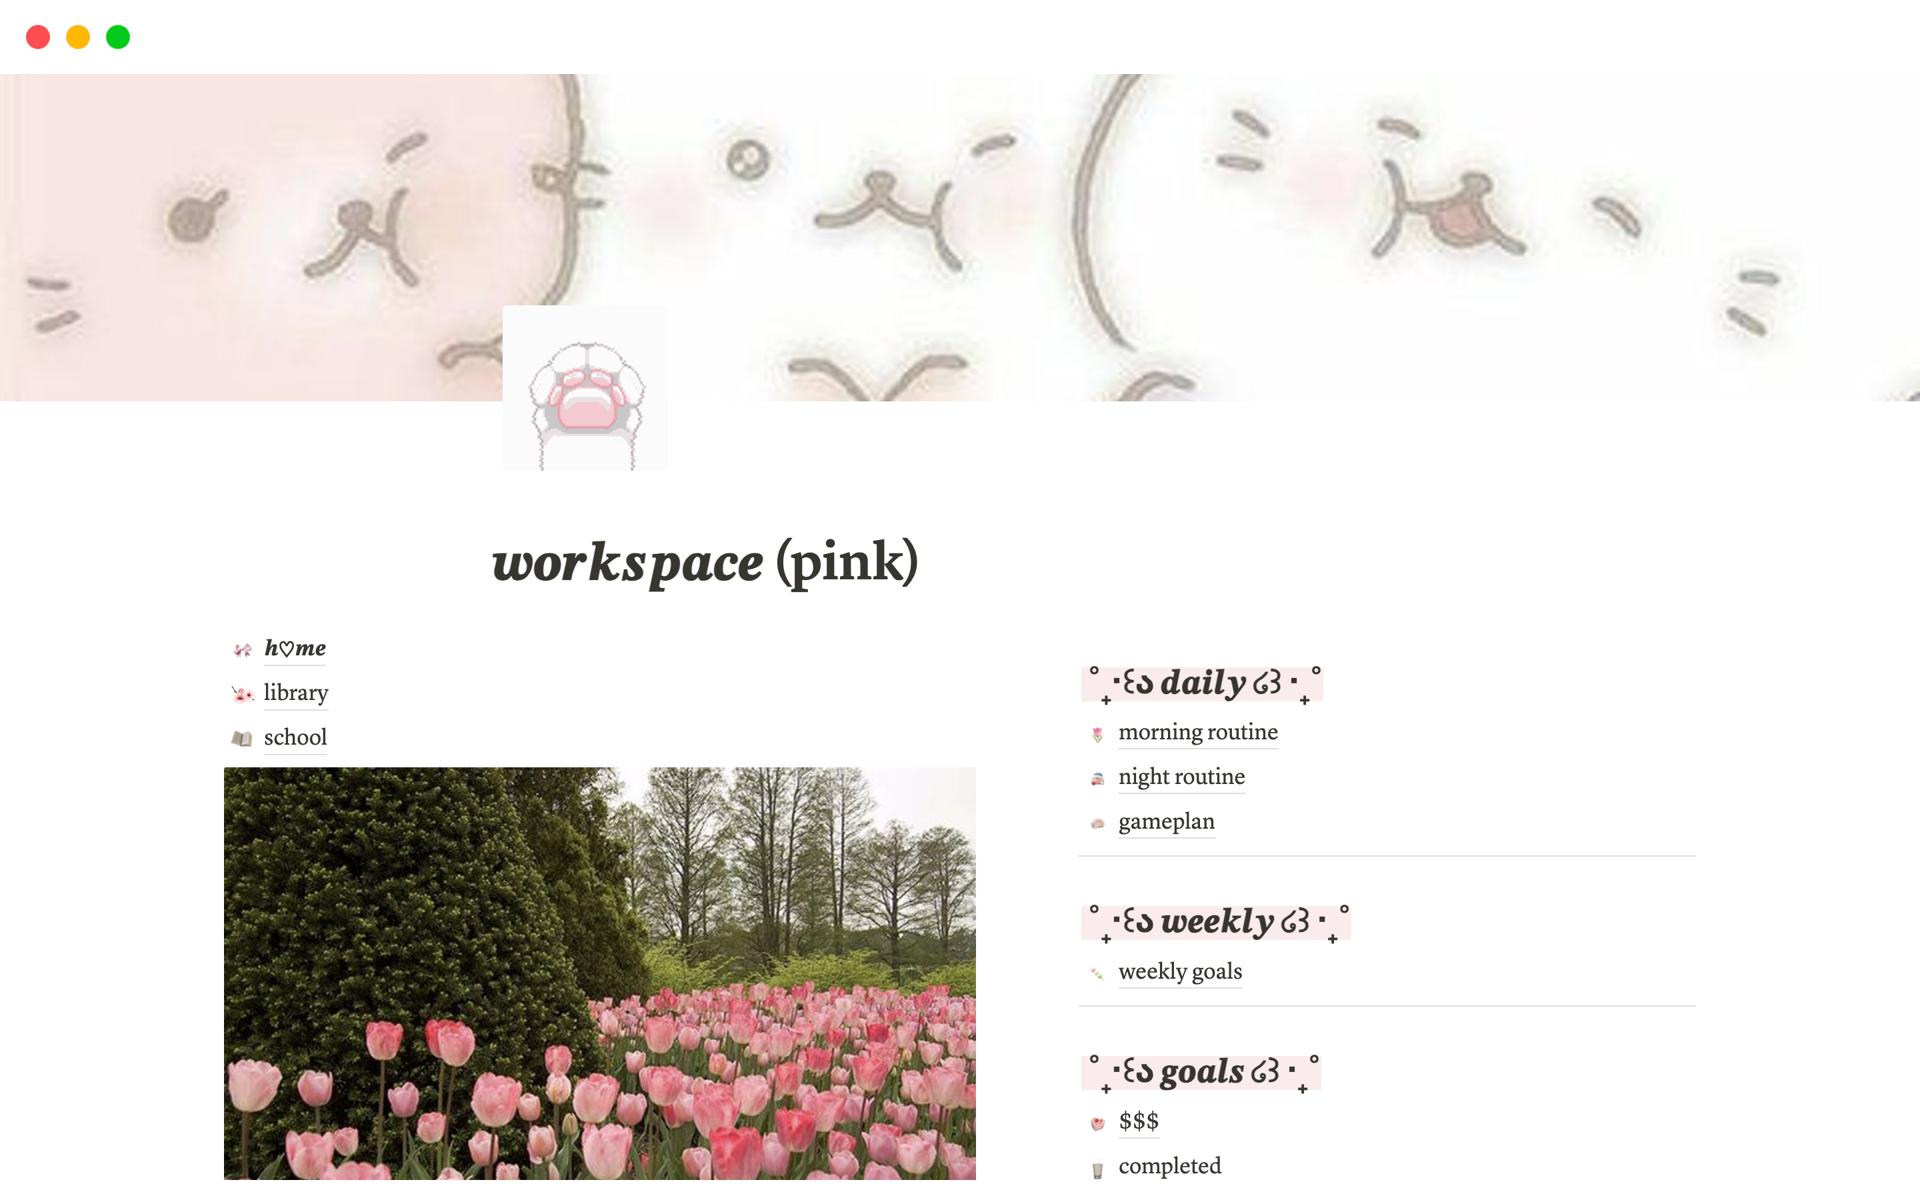 Aperçu du modèle de workspace (pink)